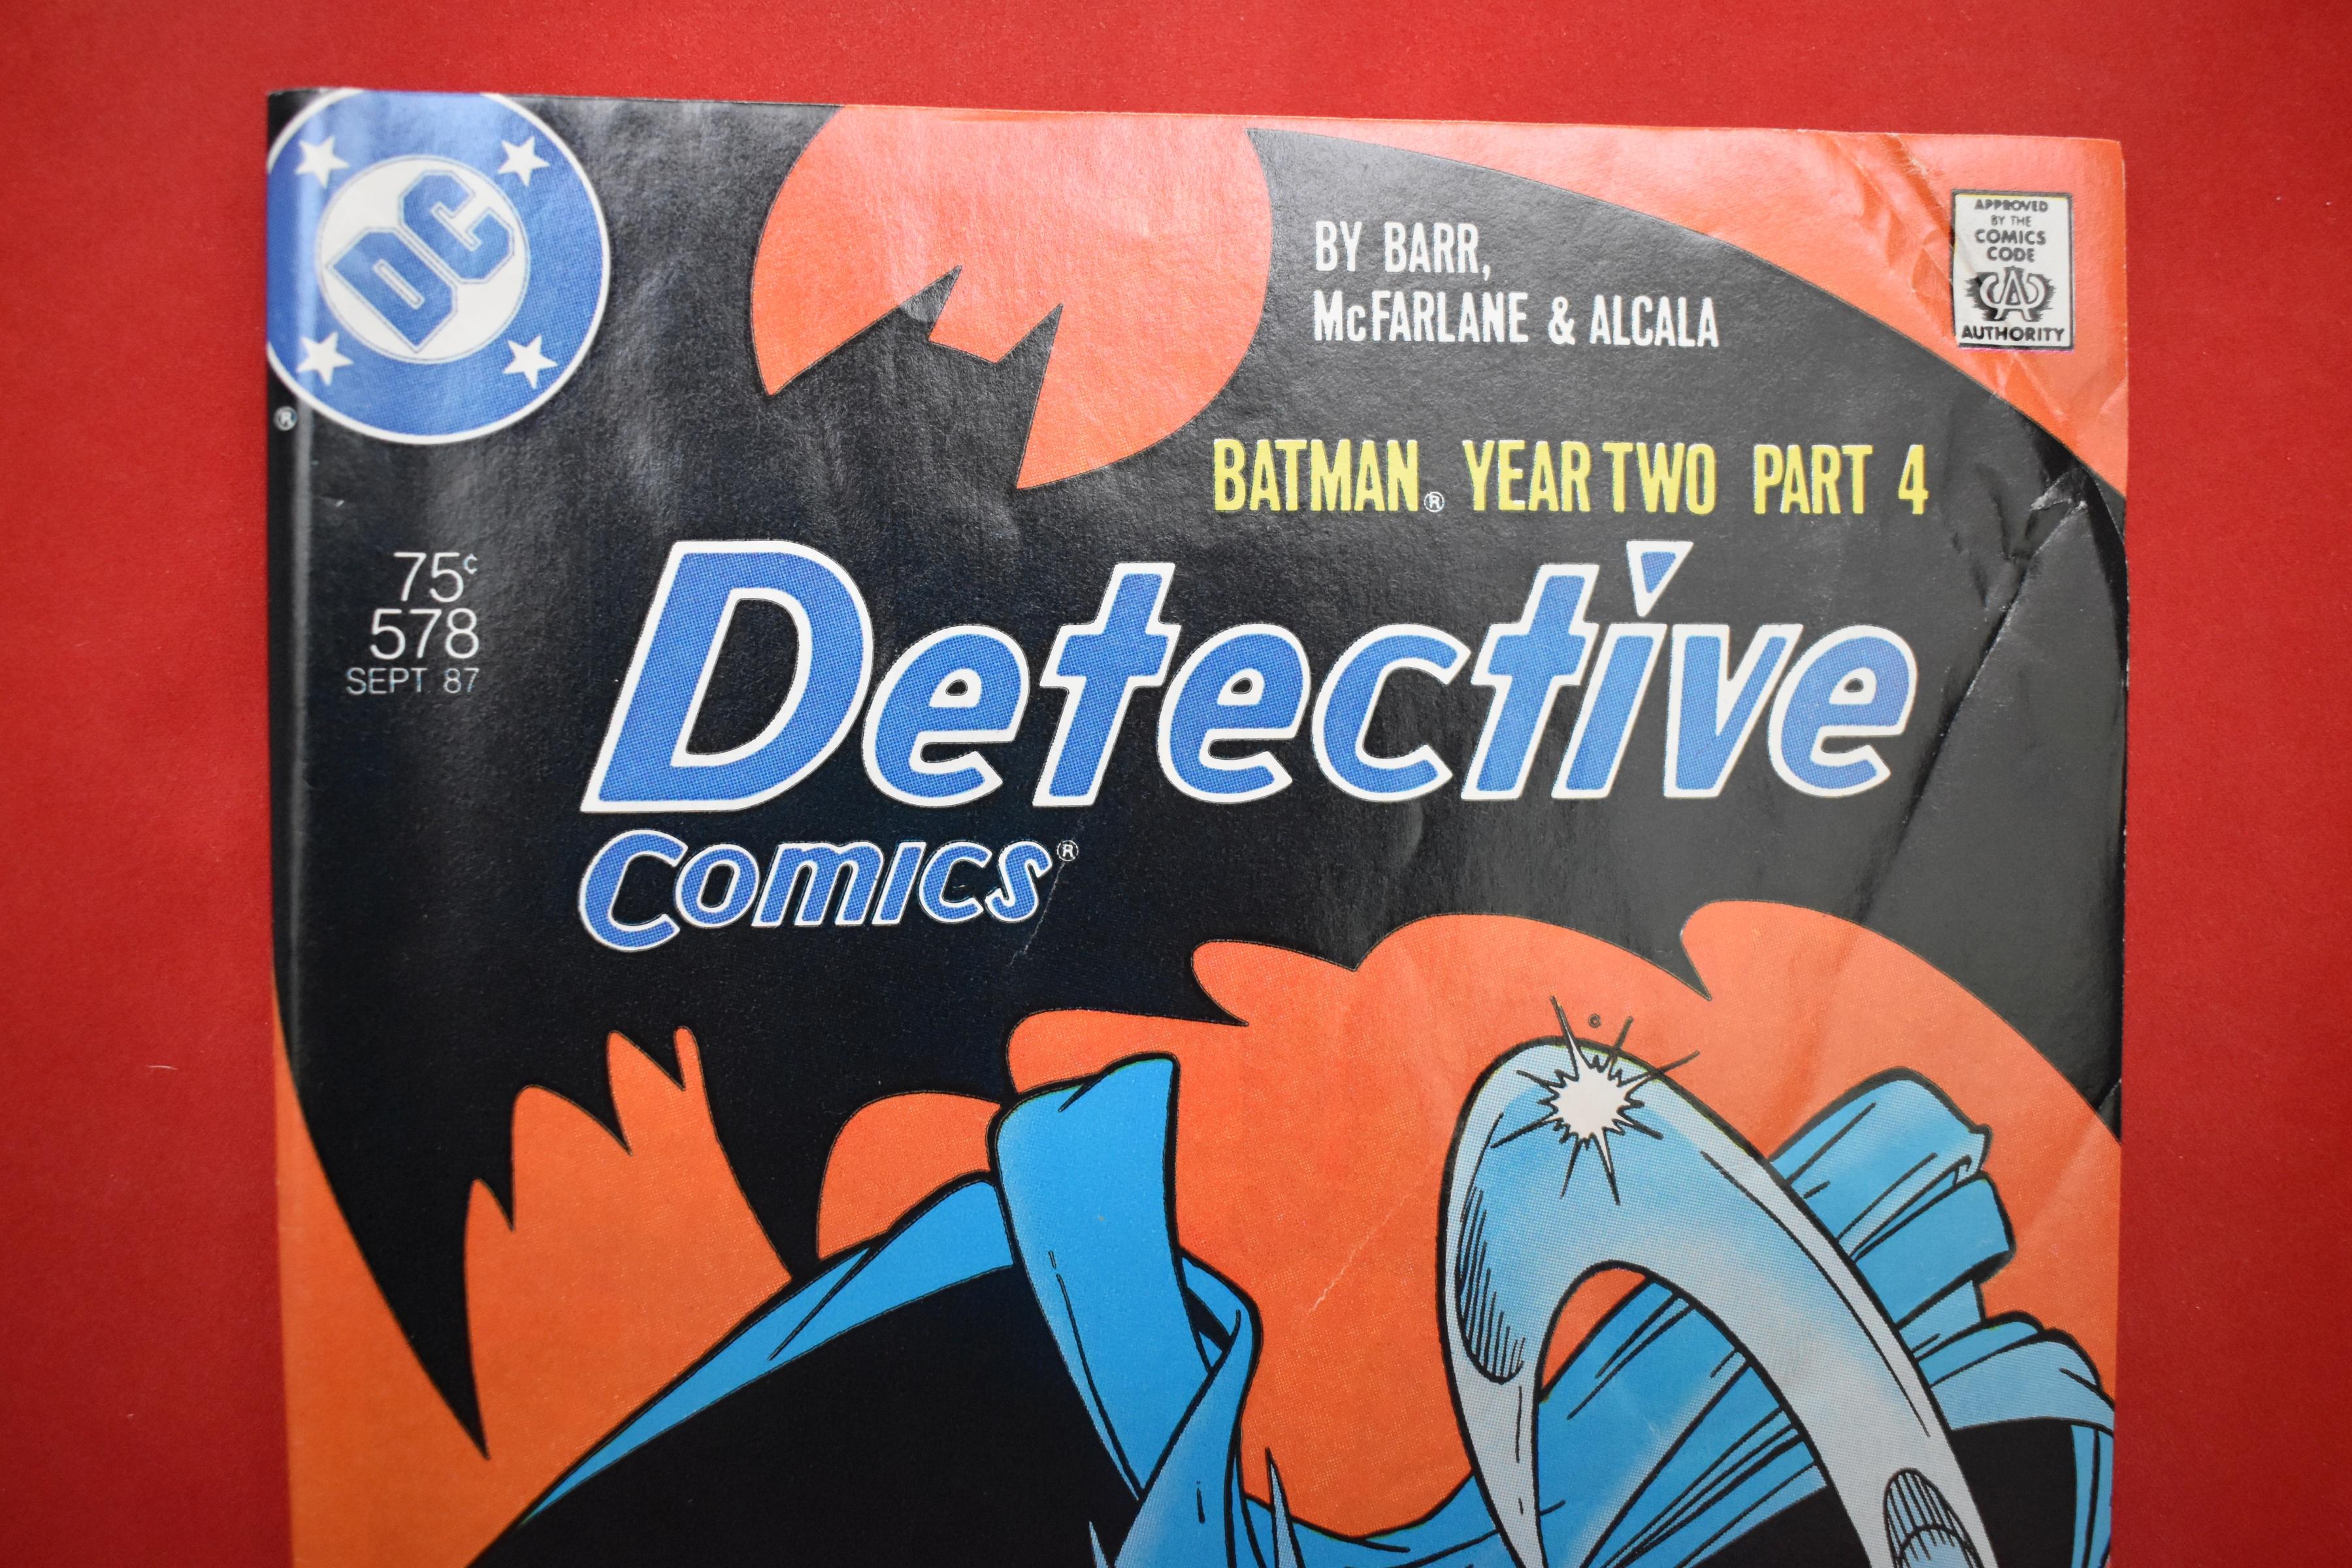 DETECTIVE COMICS #578 | YEAR TWO - PART 4 - TODD MCFARLANE | *SOLID - CREASING - SEE PICS*